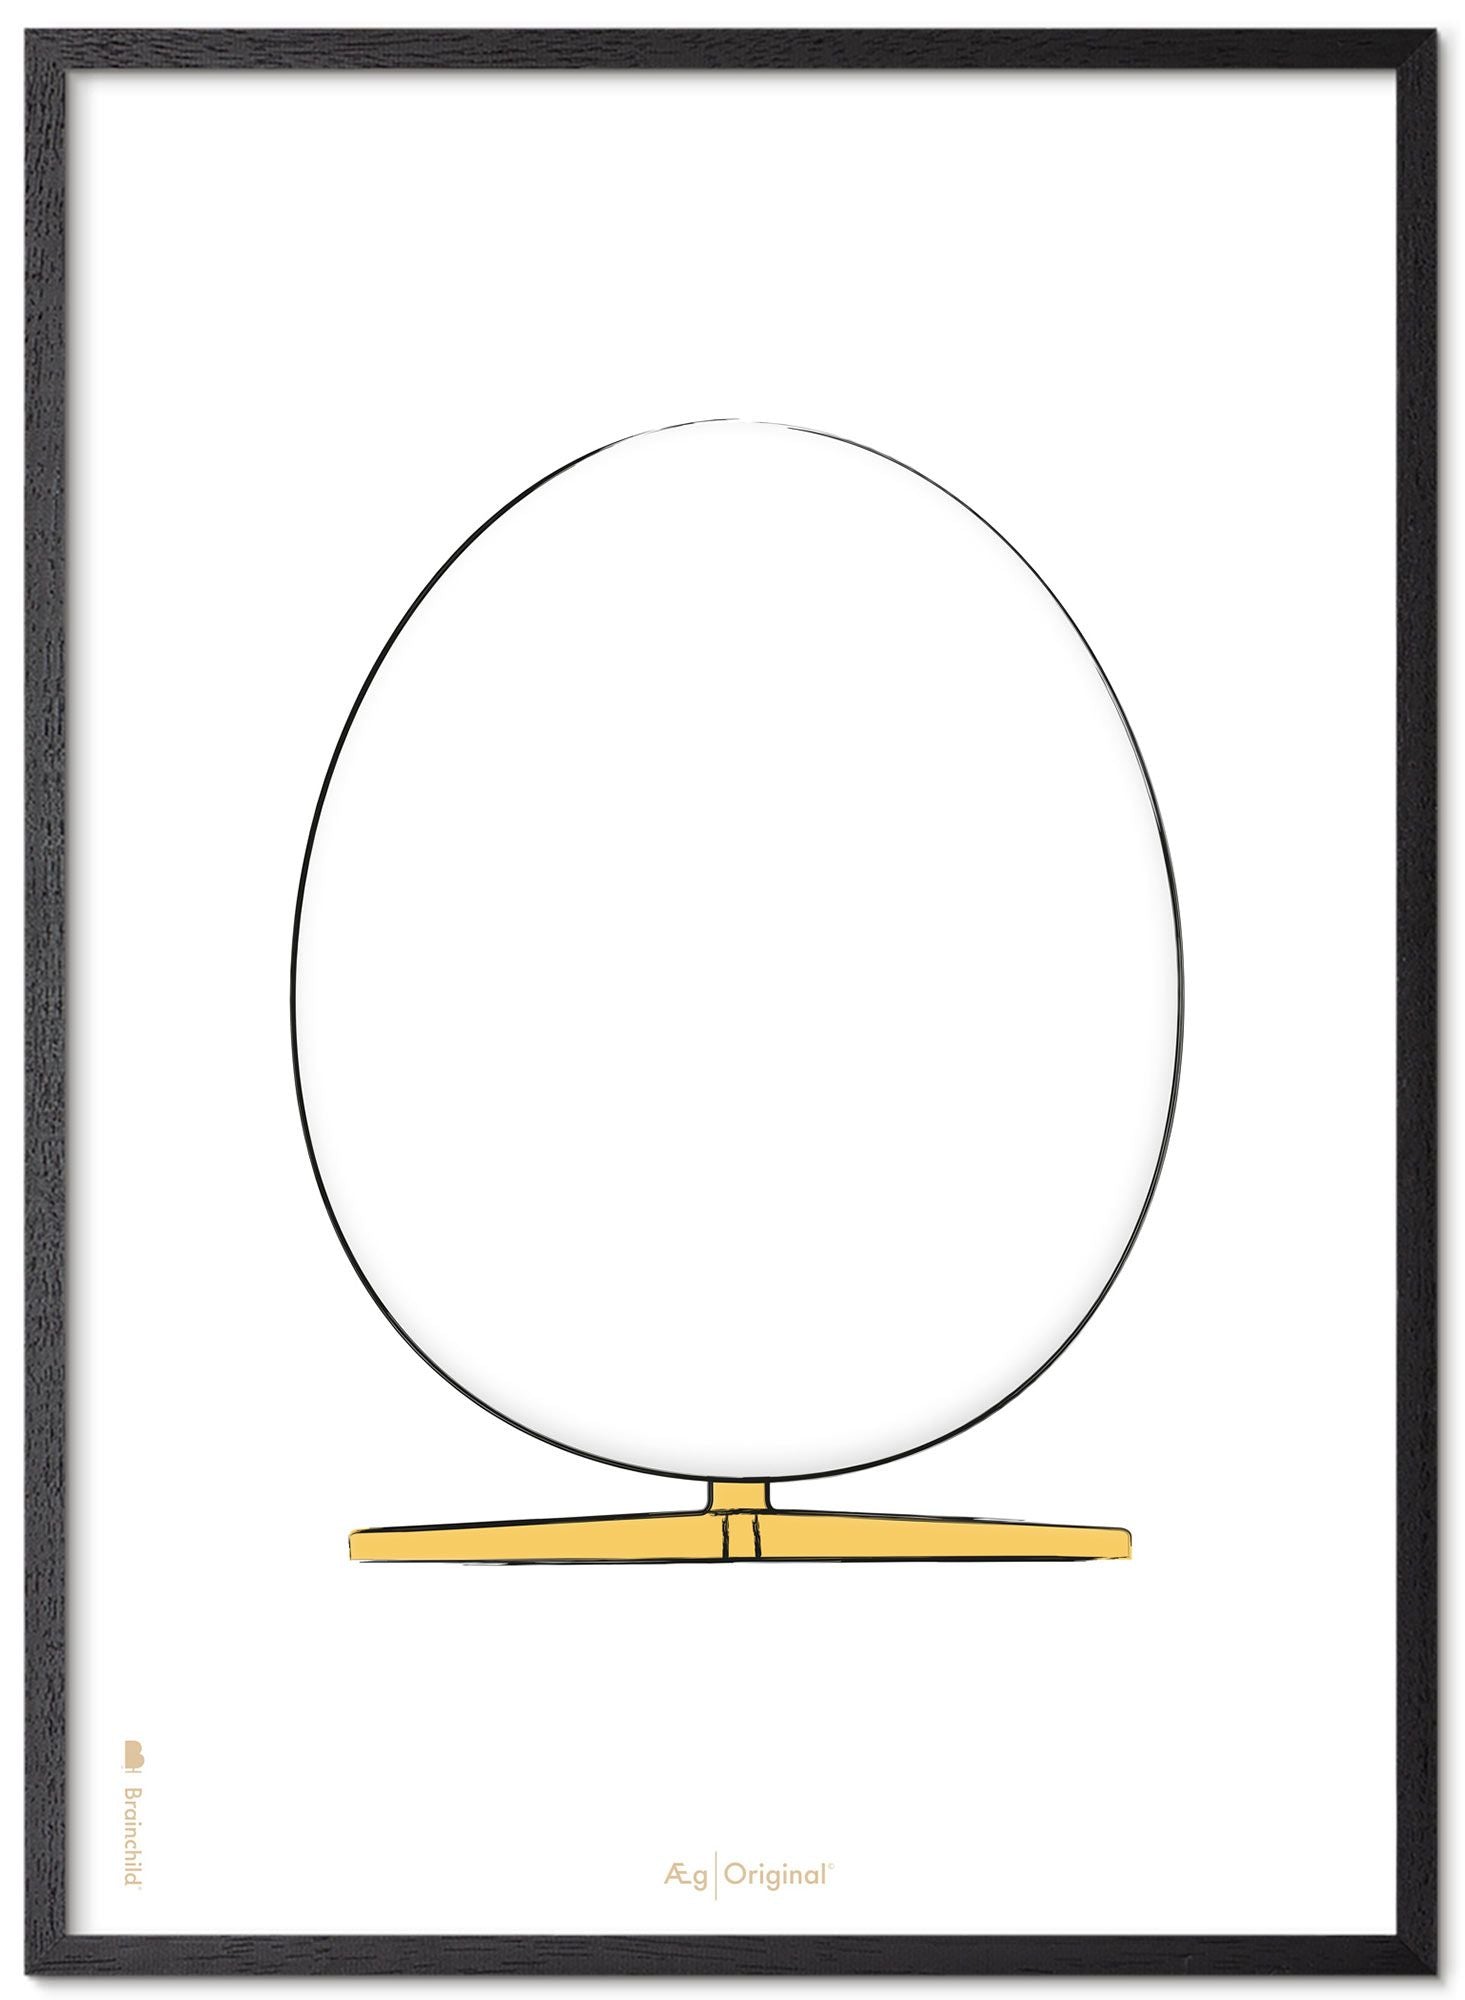 Brainchild The Egg Design Sketch Poster Frame Made Of Black Lacquered Wood 50x70 Cm, White Background